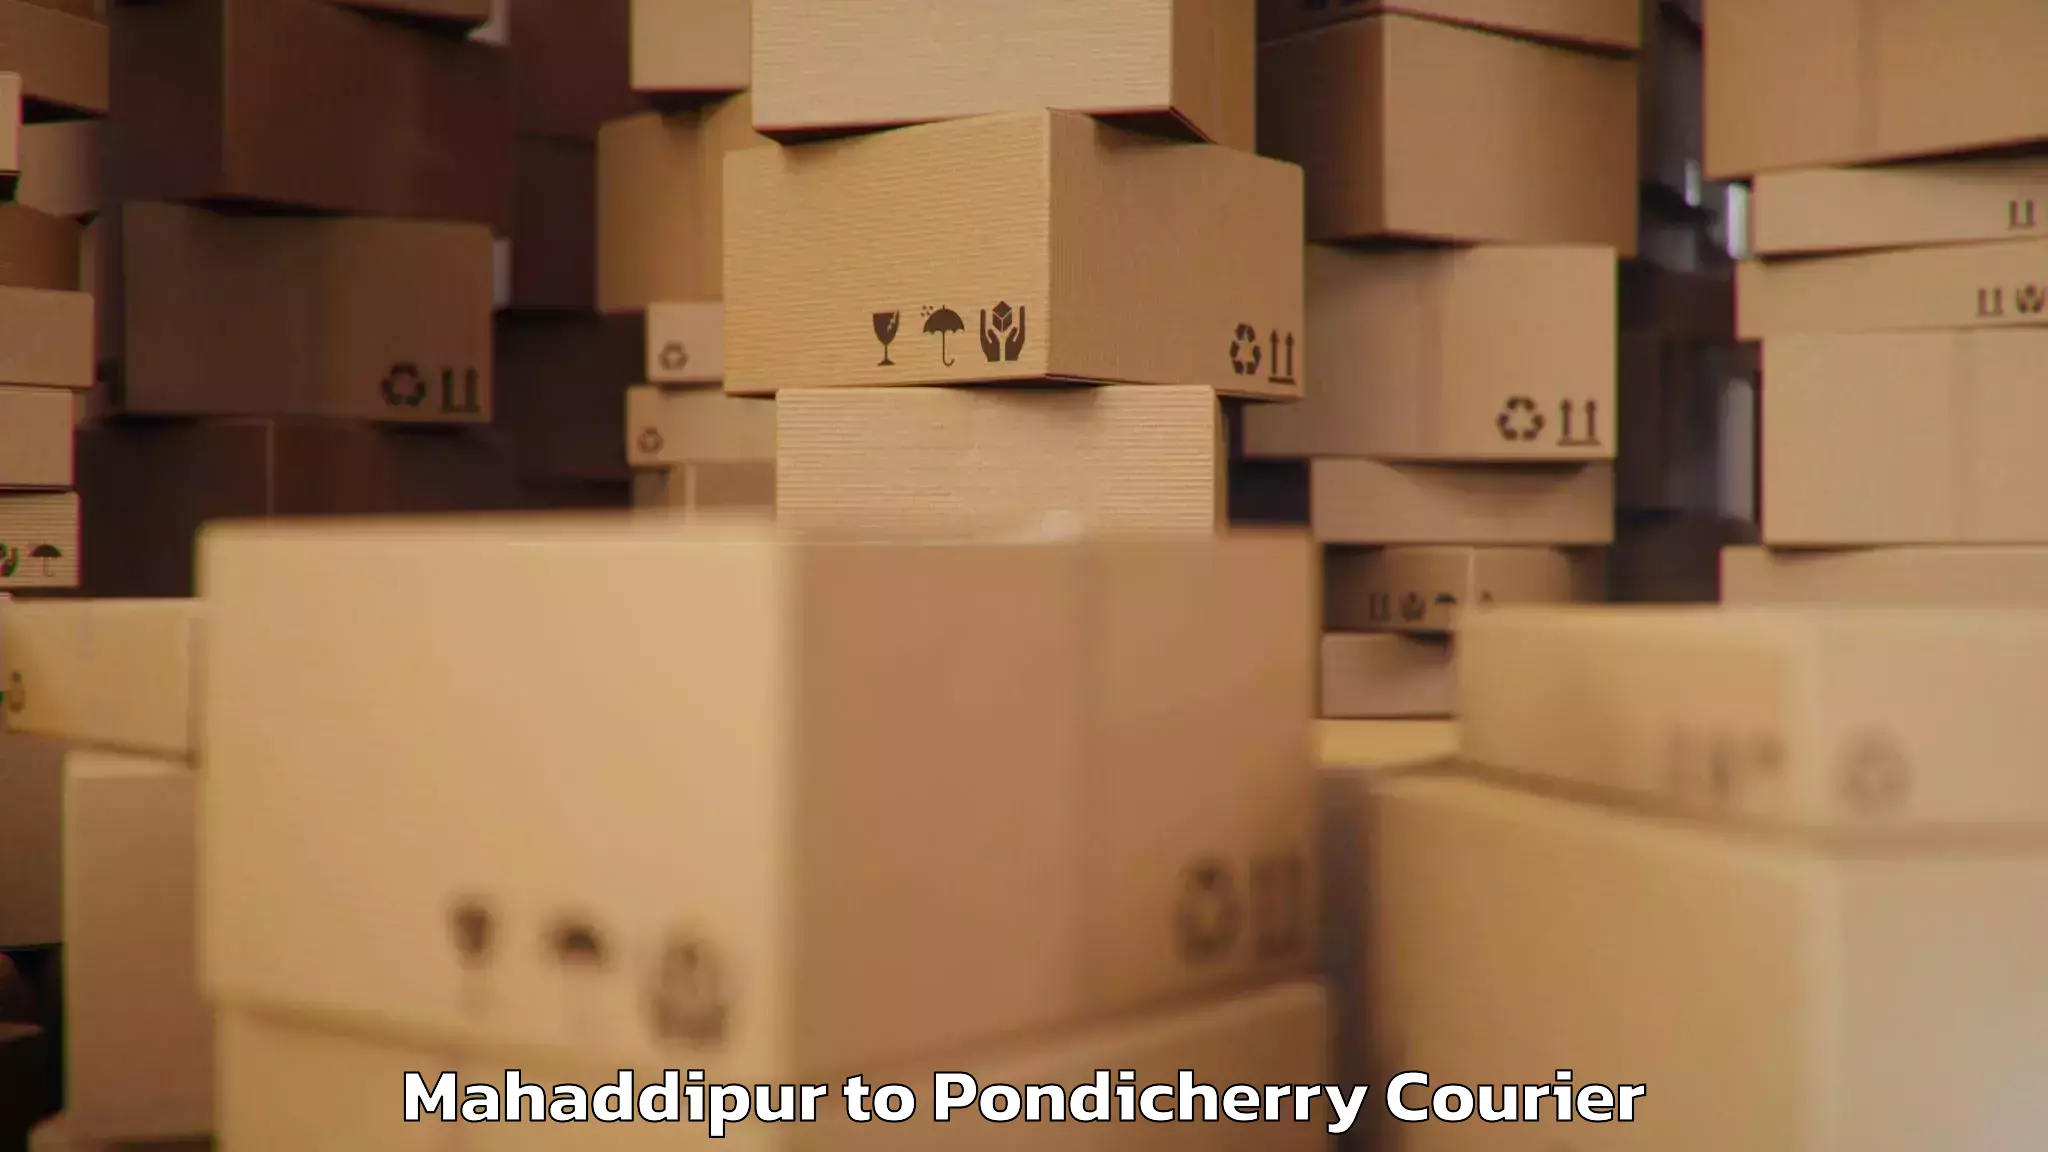 Baggage relocation service Mahaddipur to Pondicherry University